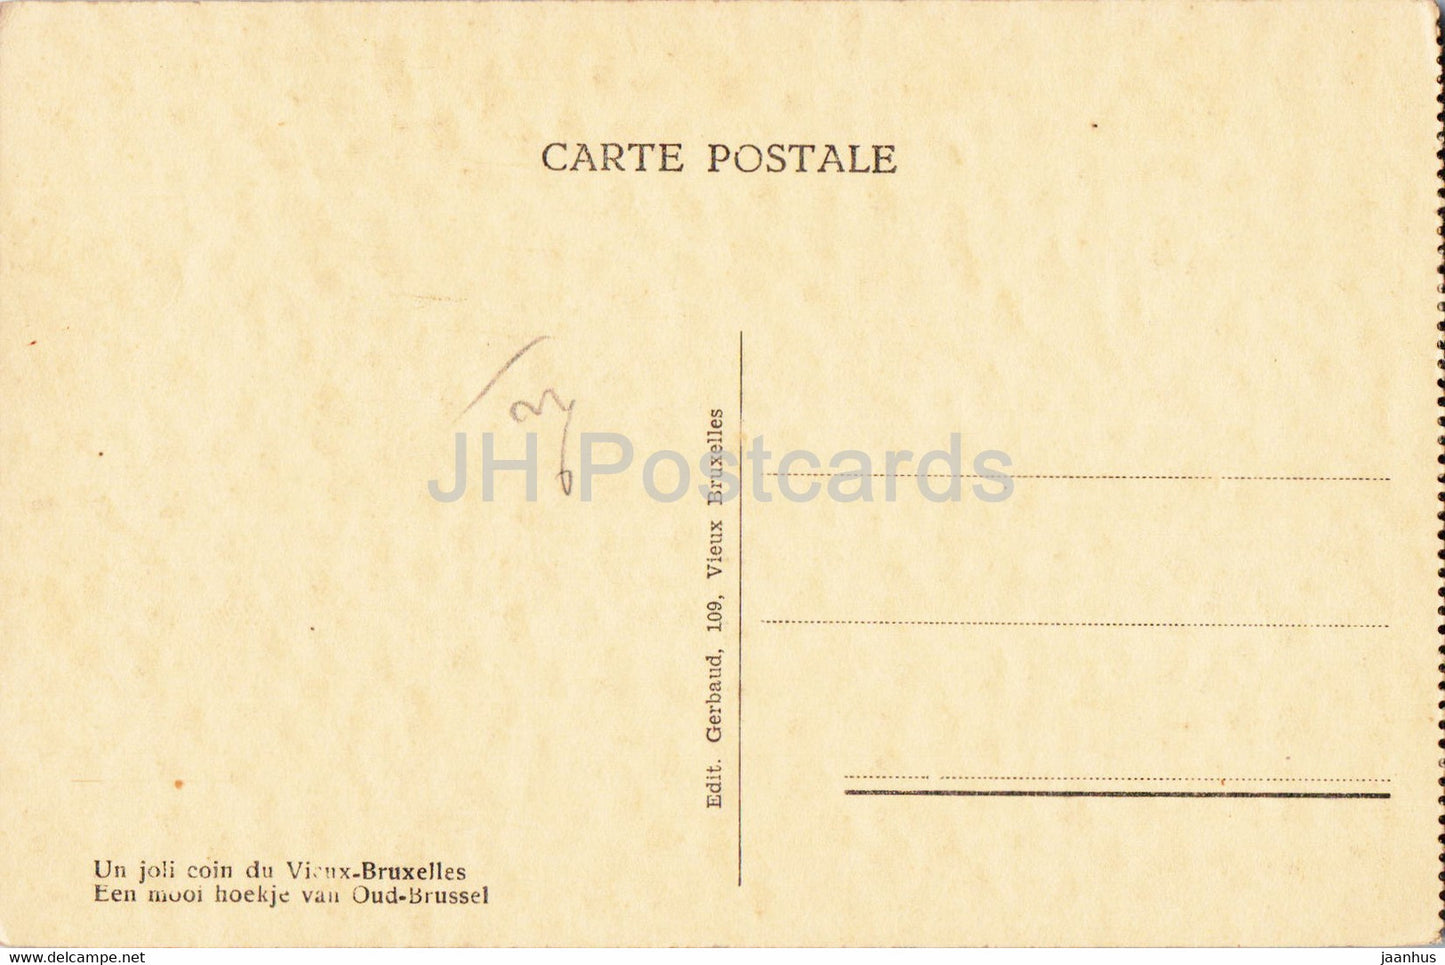 Bruxelles - Brüssel - Weltausstellung 1935 - Un jolicoin du Vieux Bruxelles - alte Postkarte - Belgien - unbenutzt